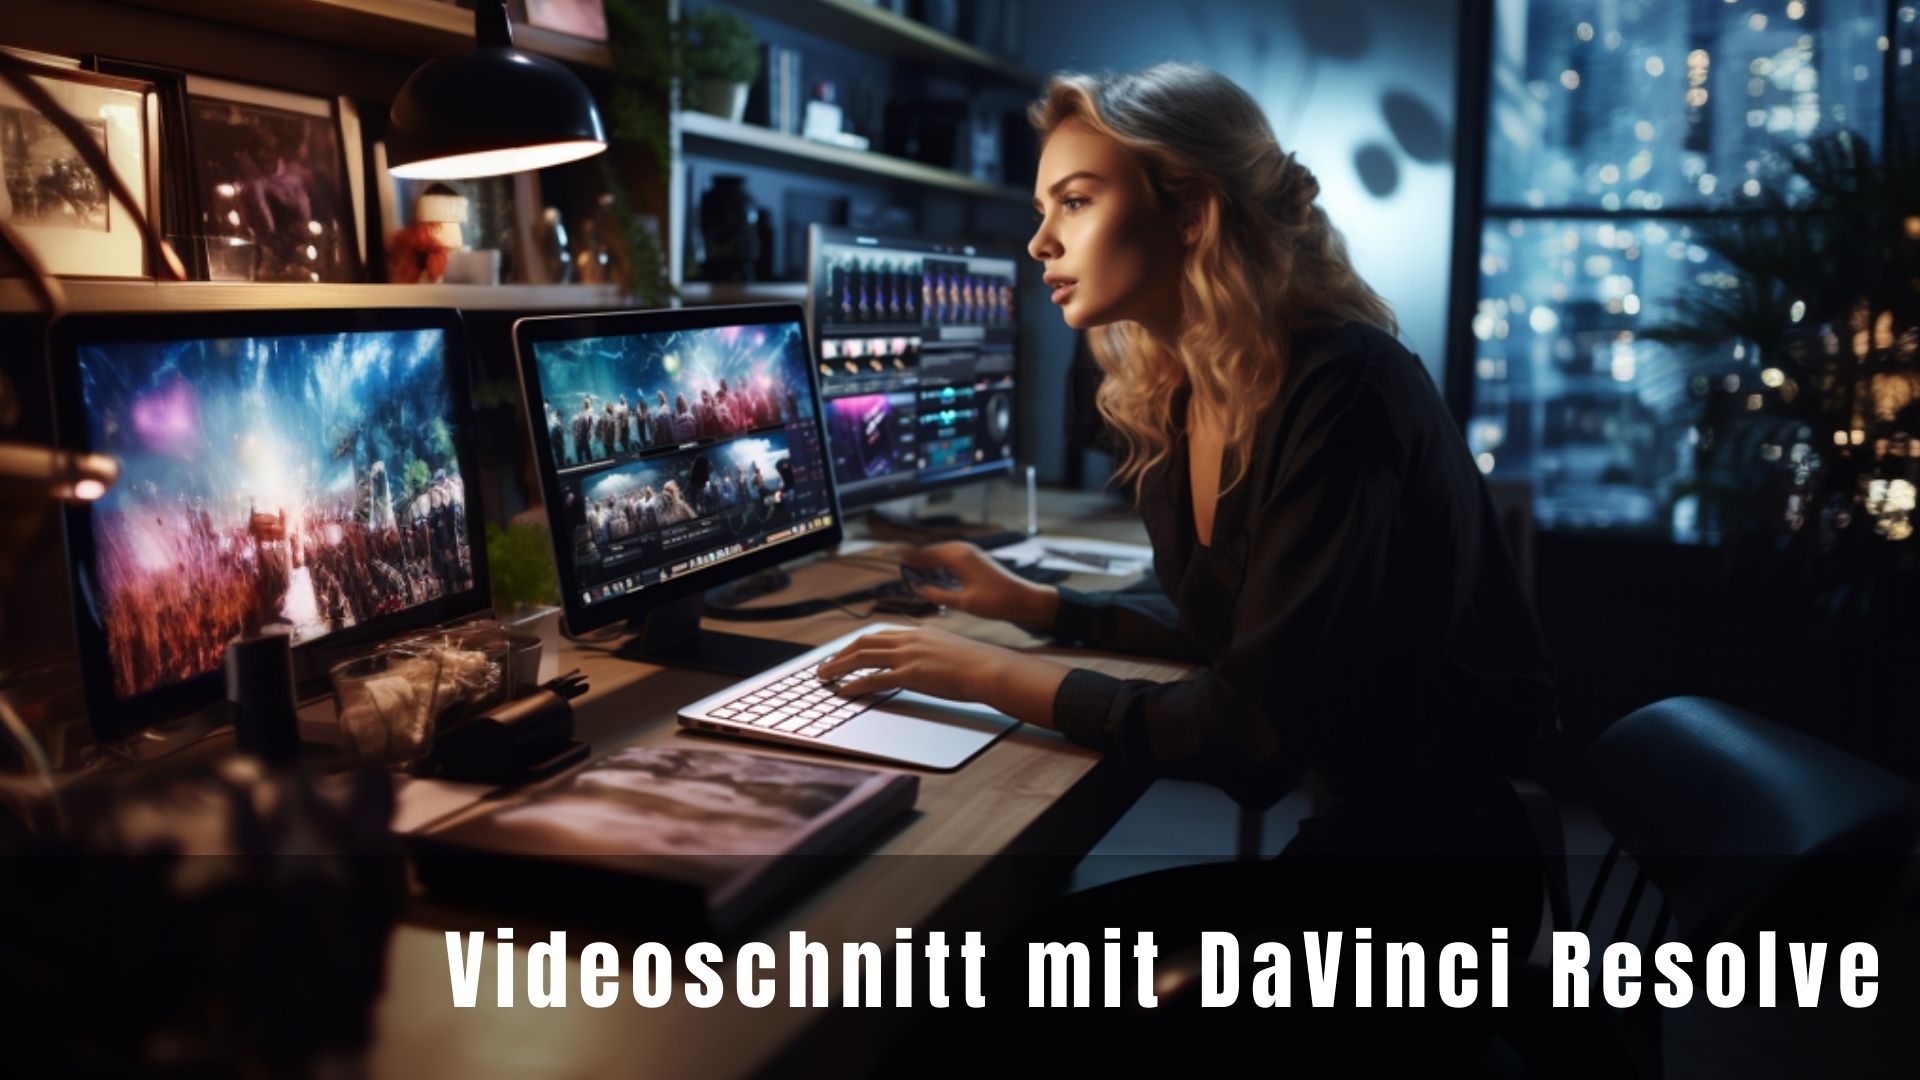 Videoschnitt am Desktop mit DavinciResolve | Onlineworkshop